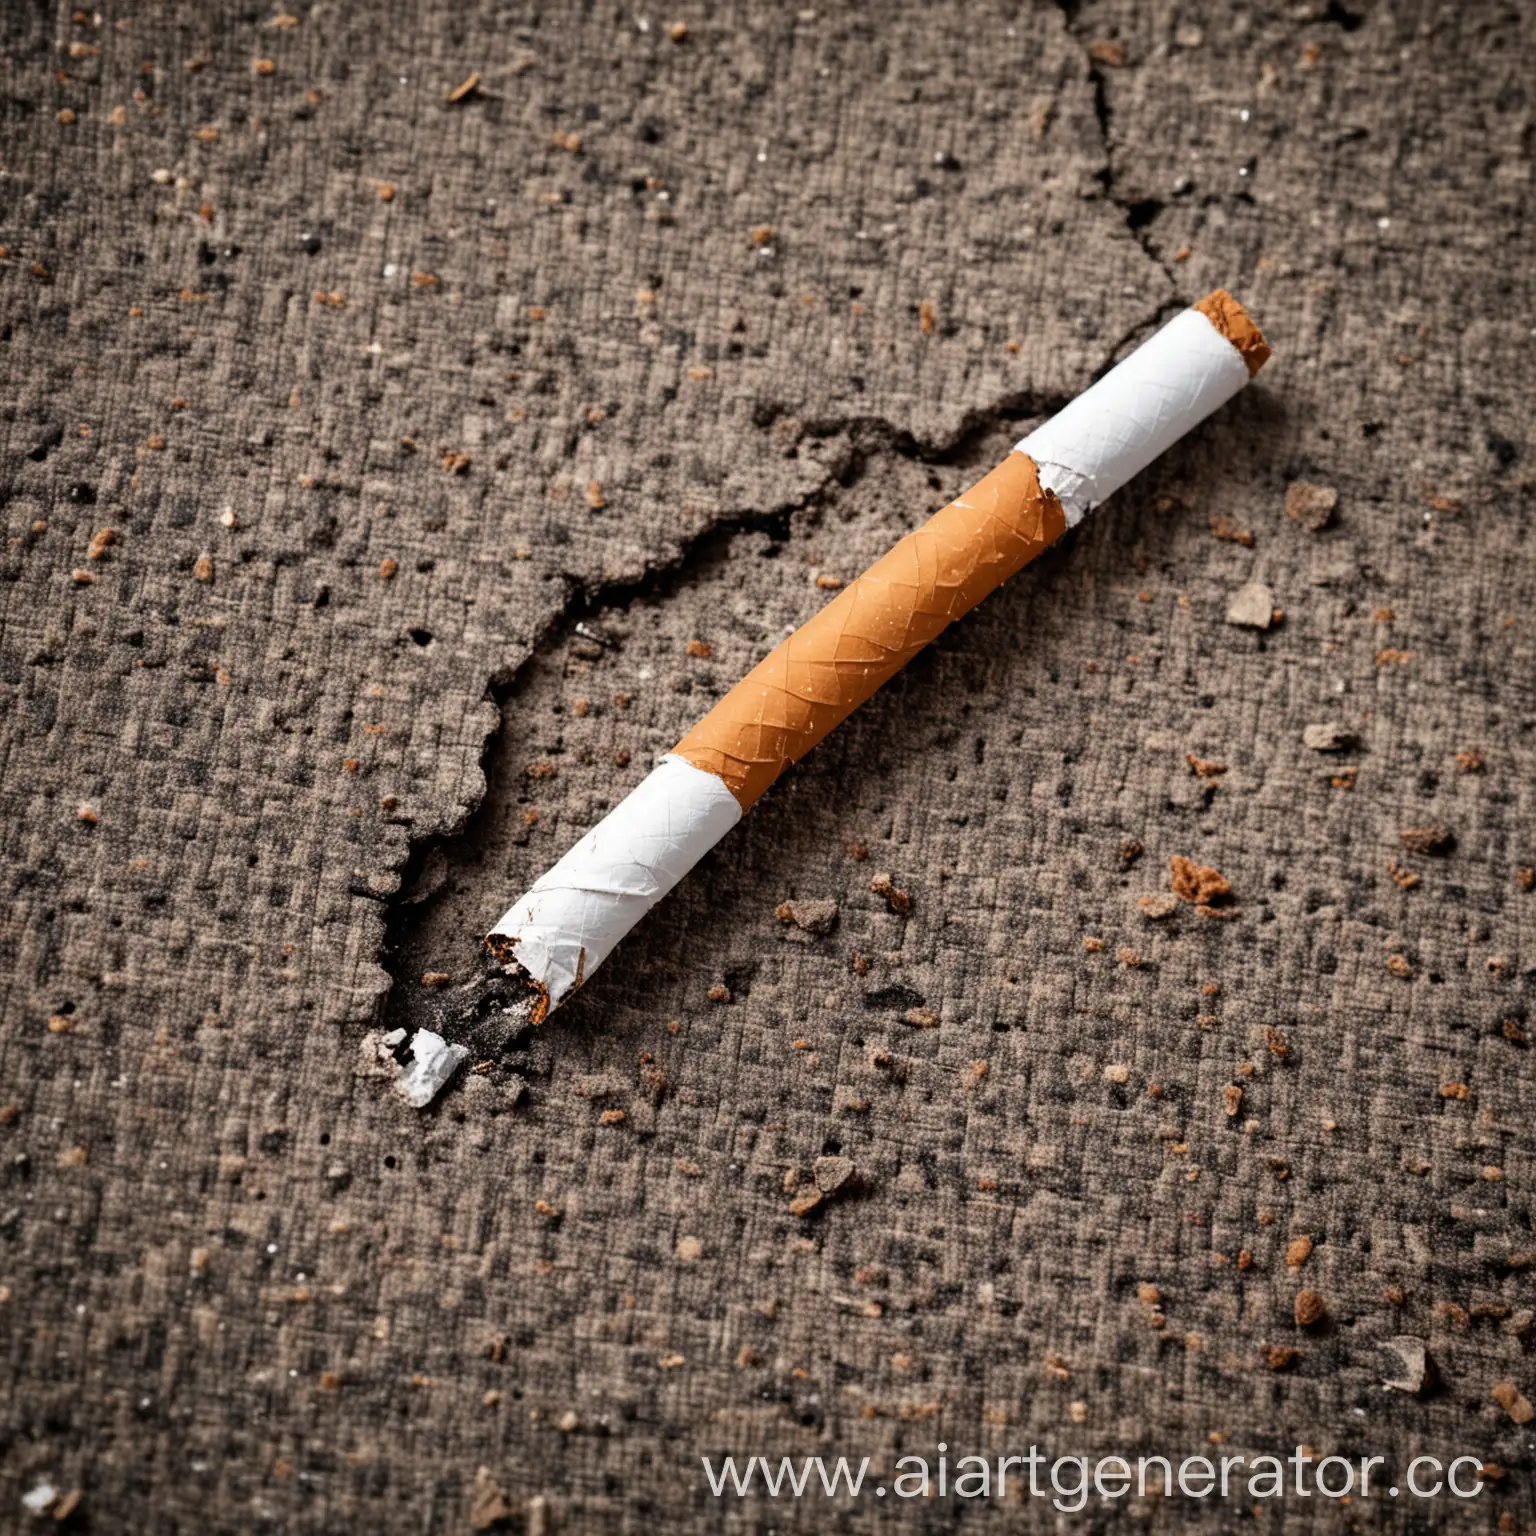 Discarded-Broken-Cigarette-on-Pavement